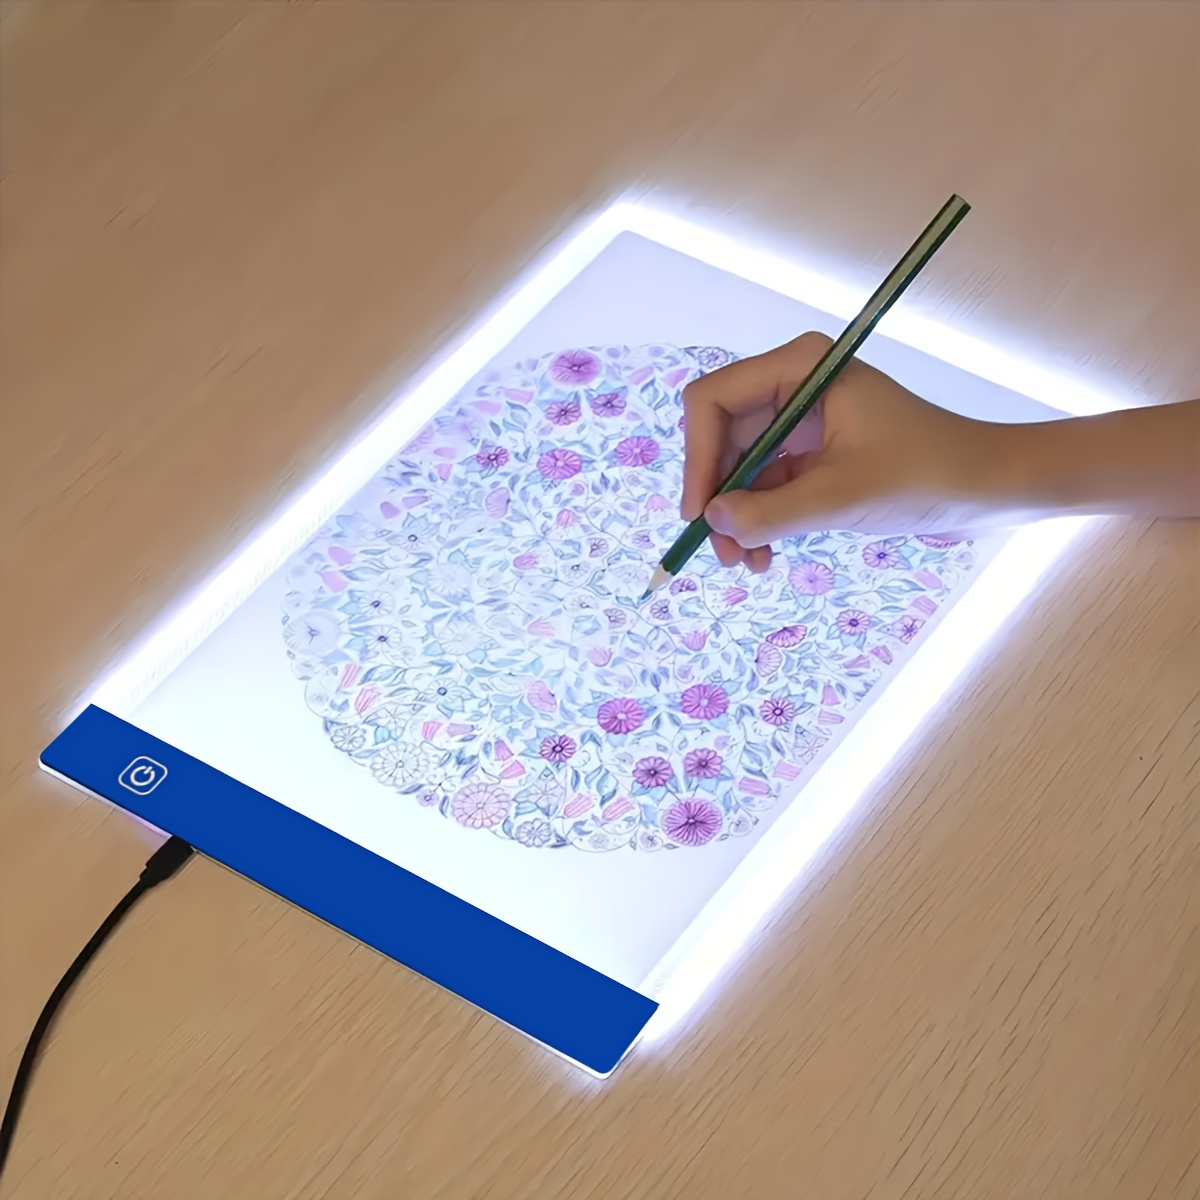 comzler Light Board, A4 Tracing Light Box, Magnetic Light Pad, Light Table  for Tracing, LED Light Drawing Board, Sketch Pad LED Light Drawing Pad